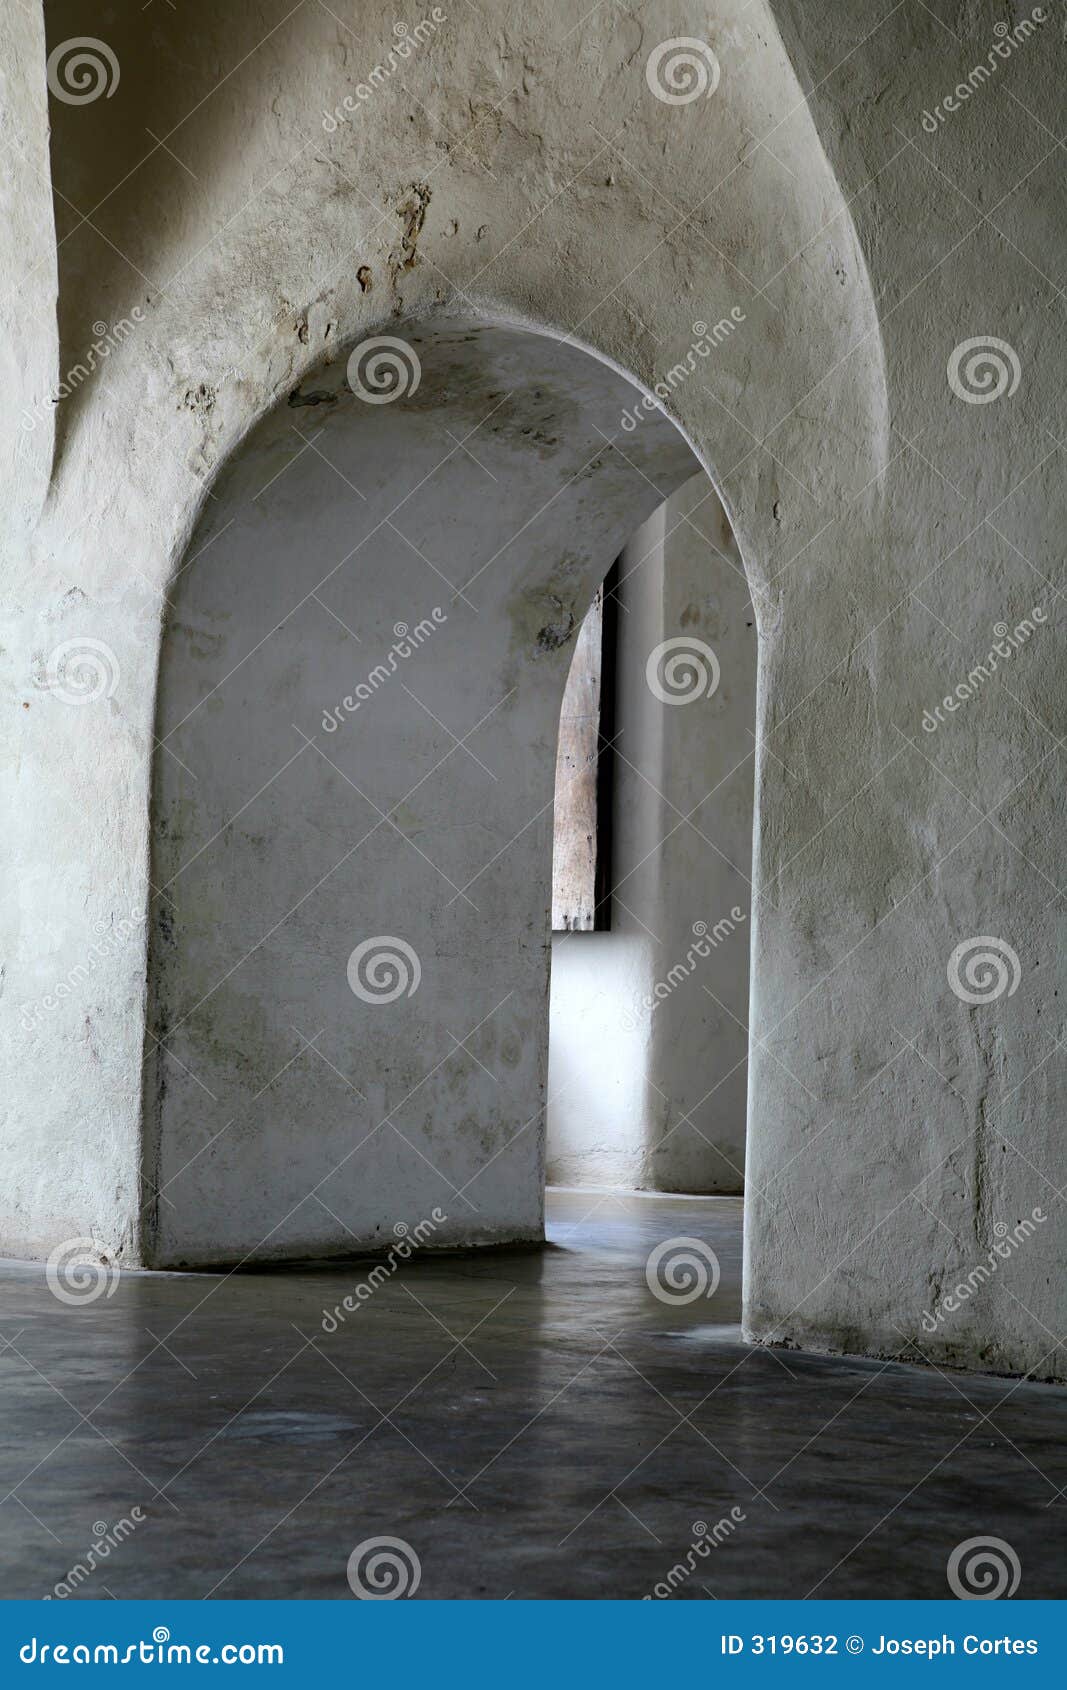 light & shadow in the passageway